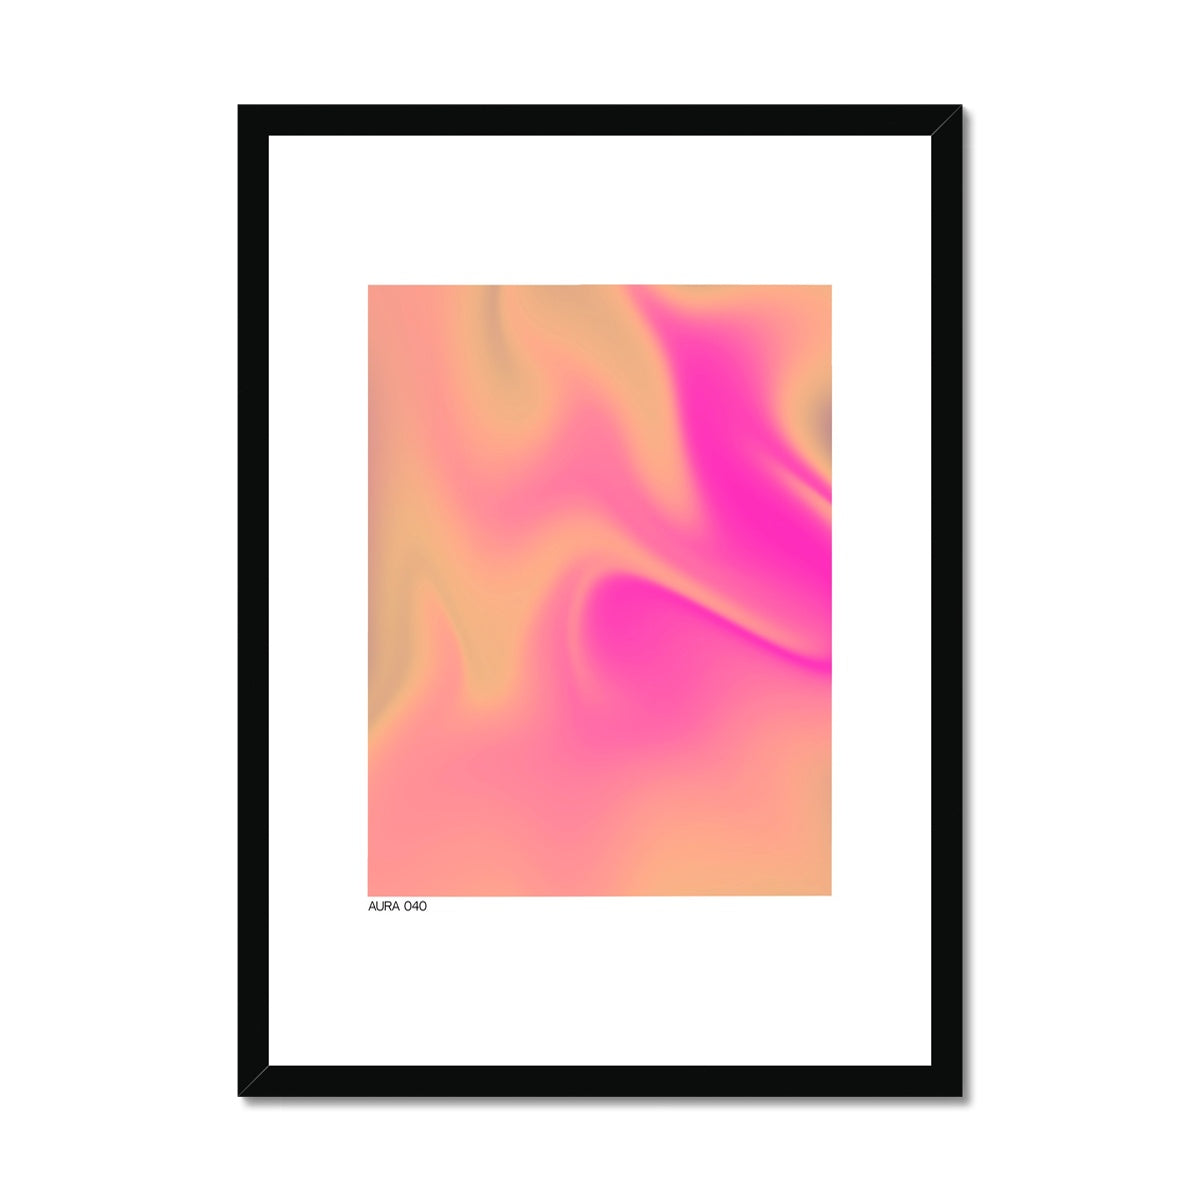 aura 040 Framed & Mounted Print